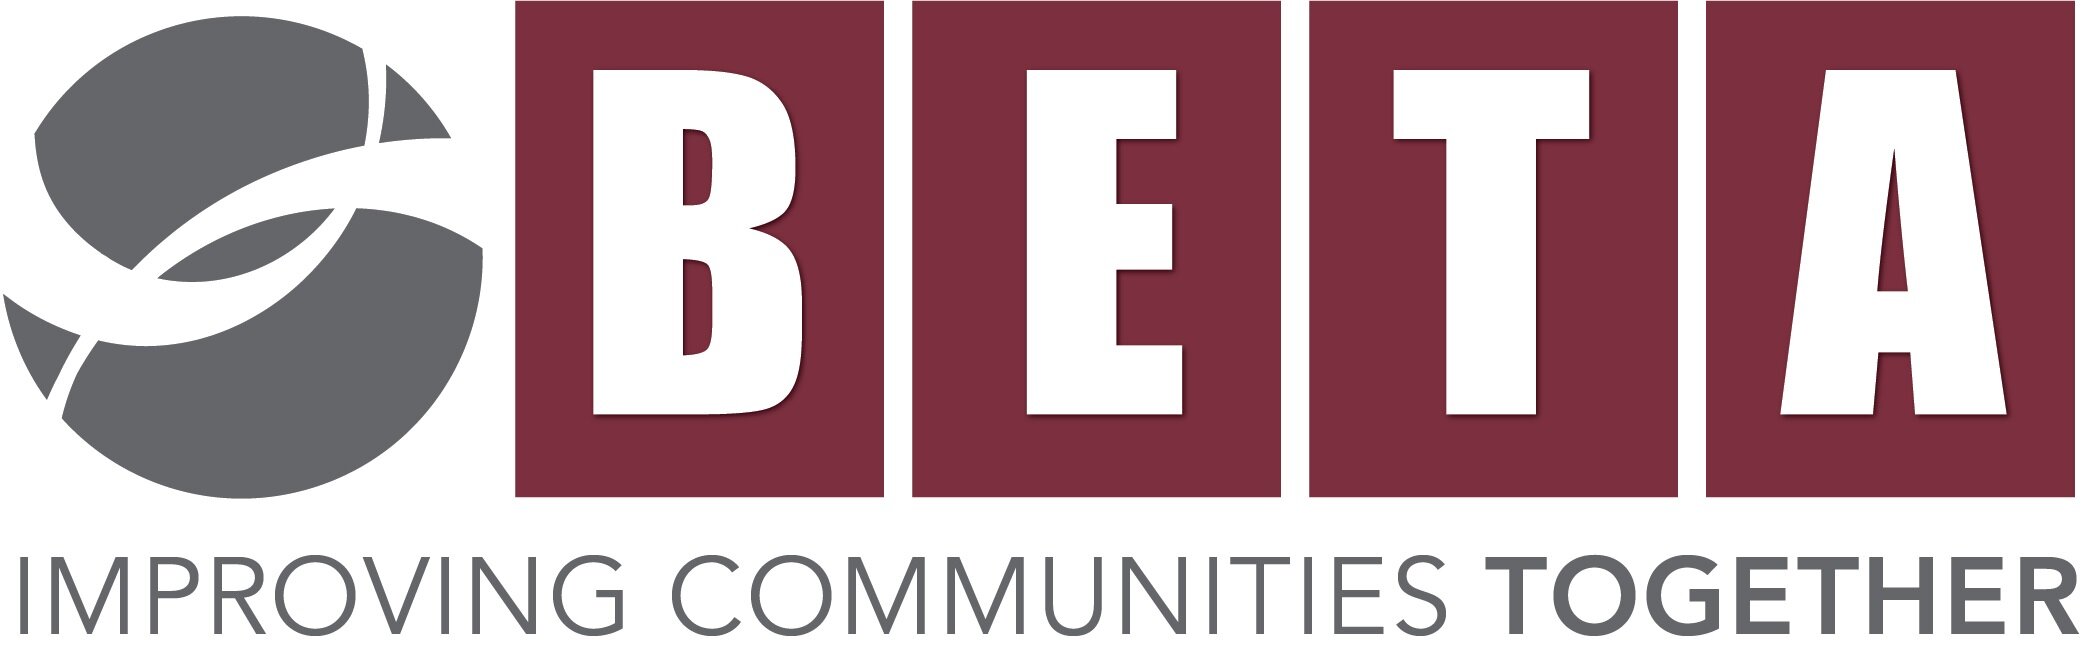 BETA-Group-Logo-and-tagline.jpeg